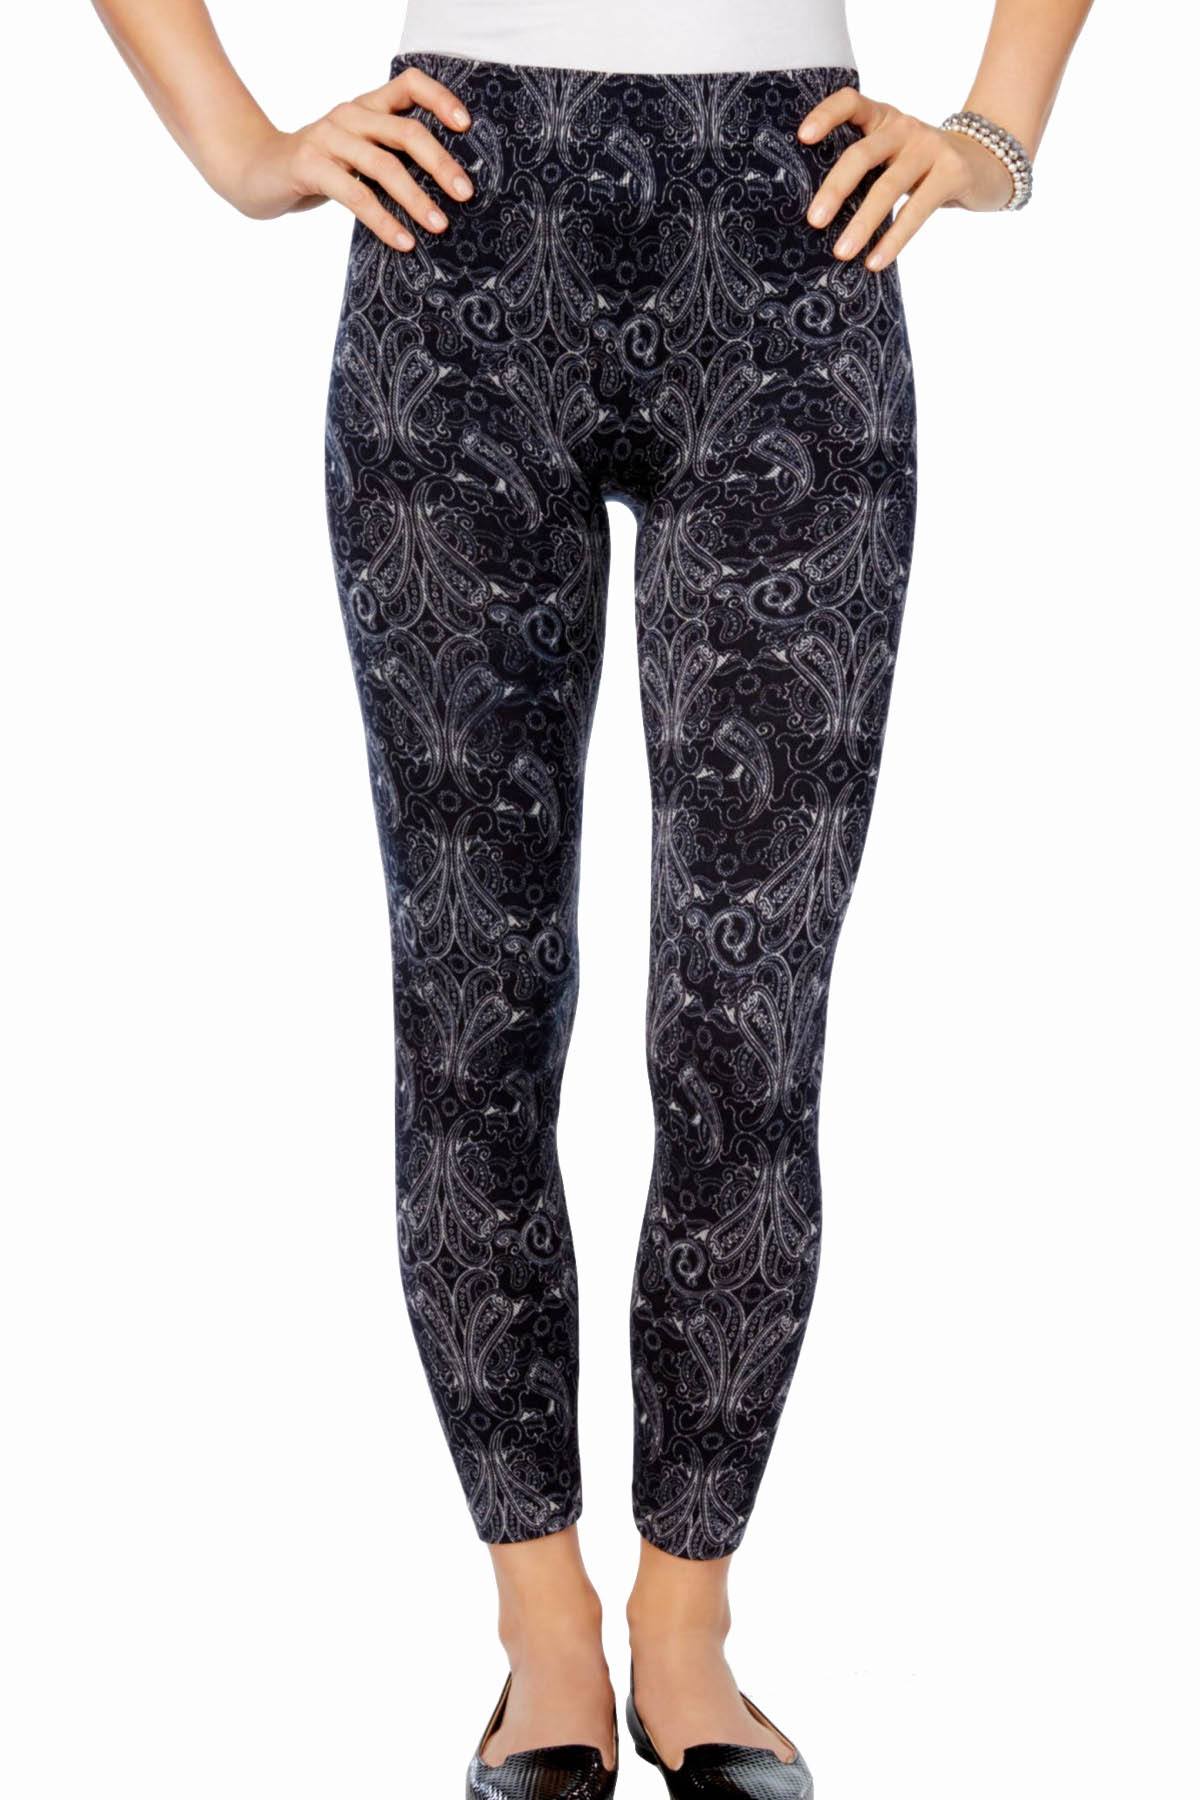 First Looks by HUE Black Floral-Bandana Seamless Legging – CheapUndies